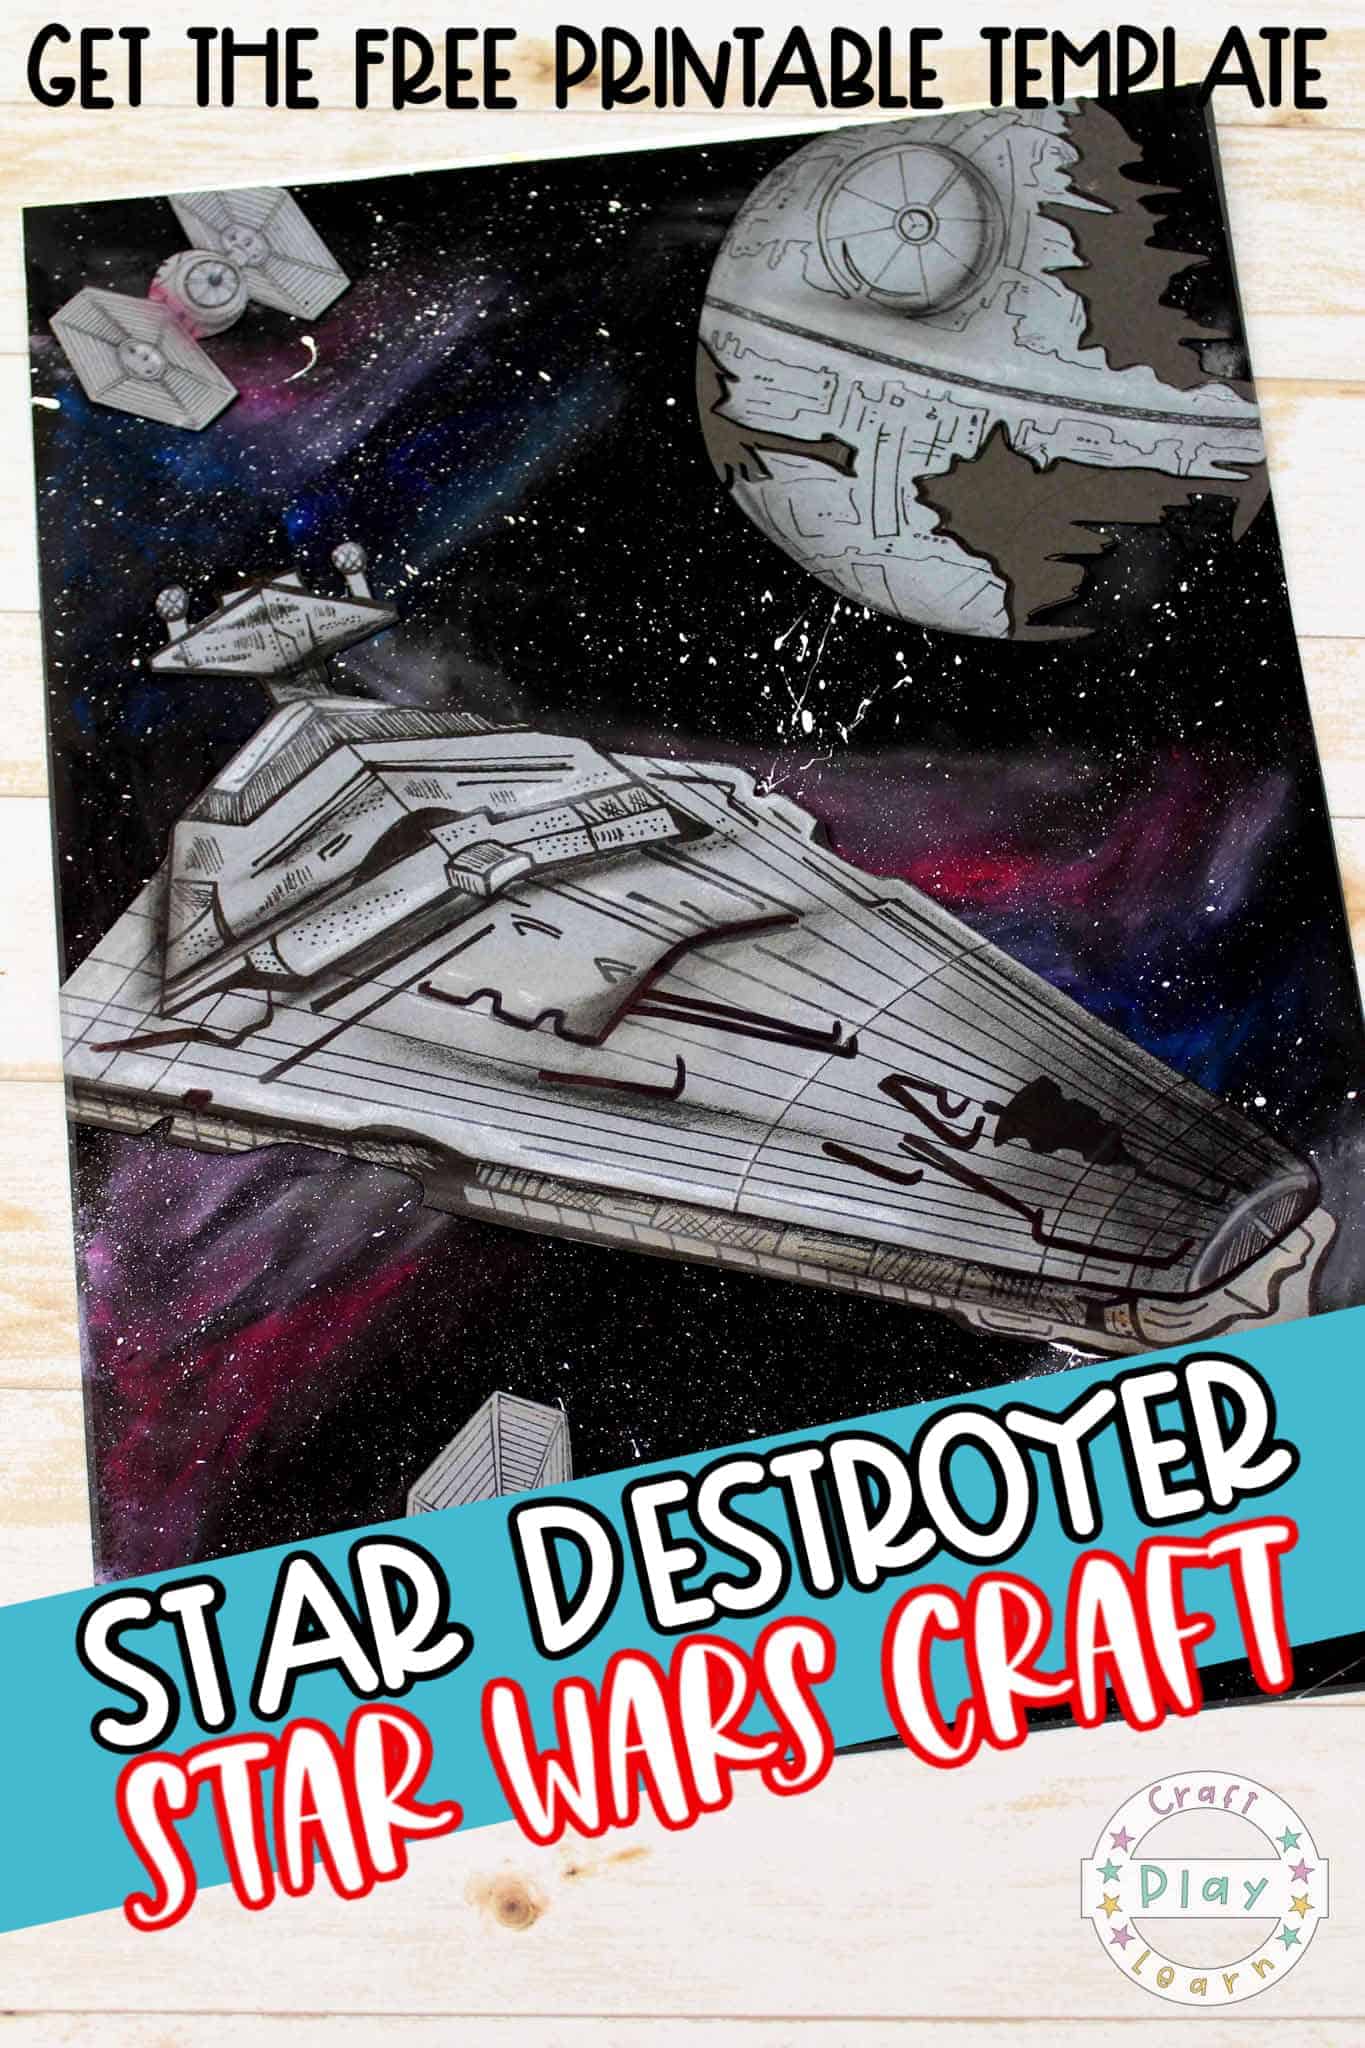 Star wars star destroyer art project